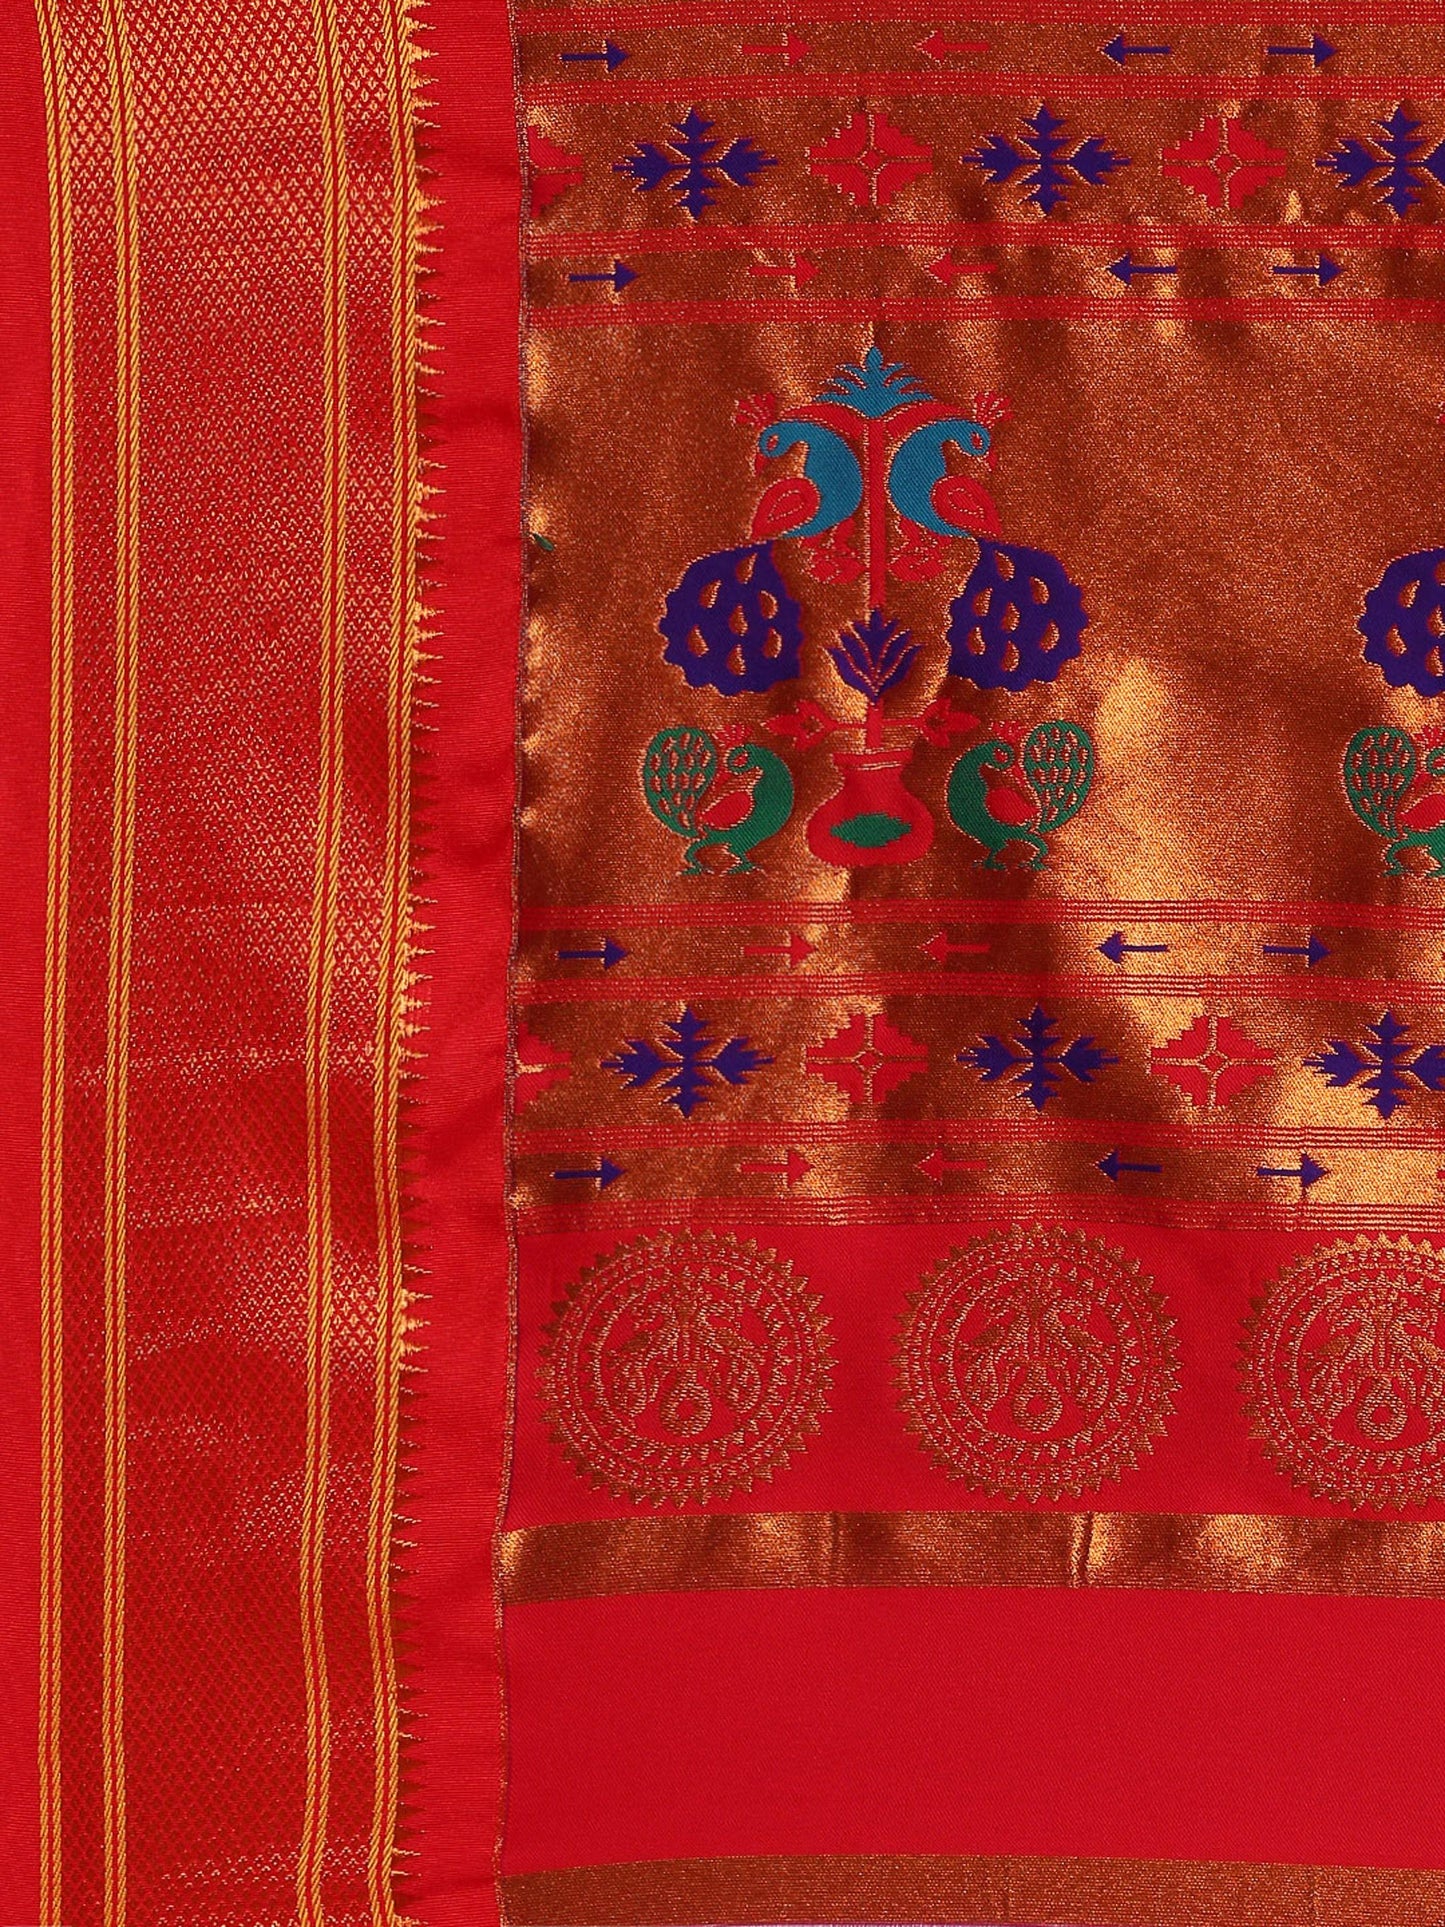            Amruta Purple & Red: Soft Silk Muniya Paithani Saree     Varkala Silk Sarees